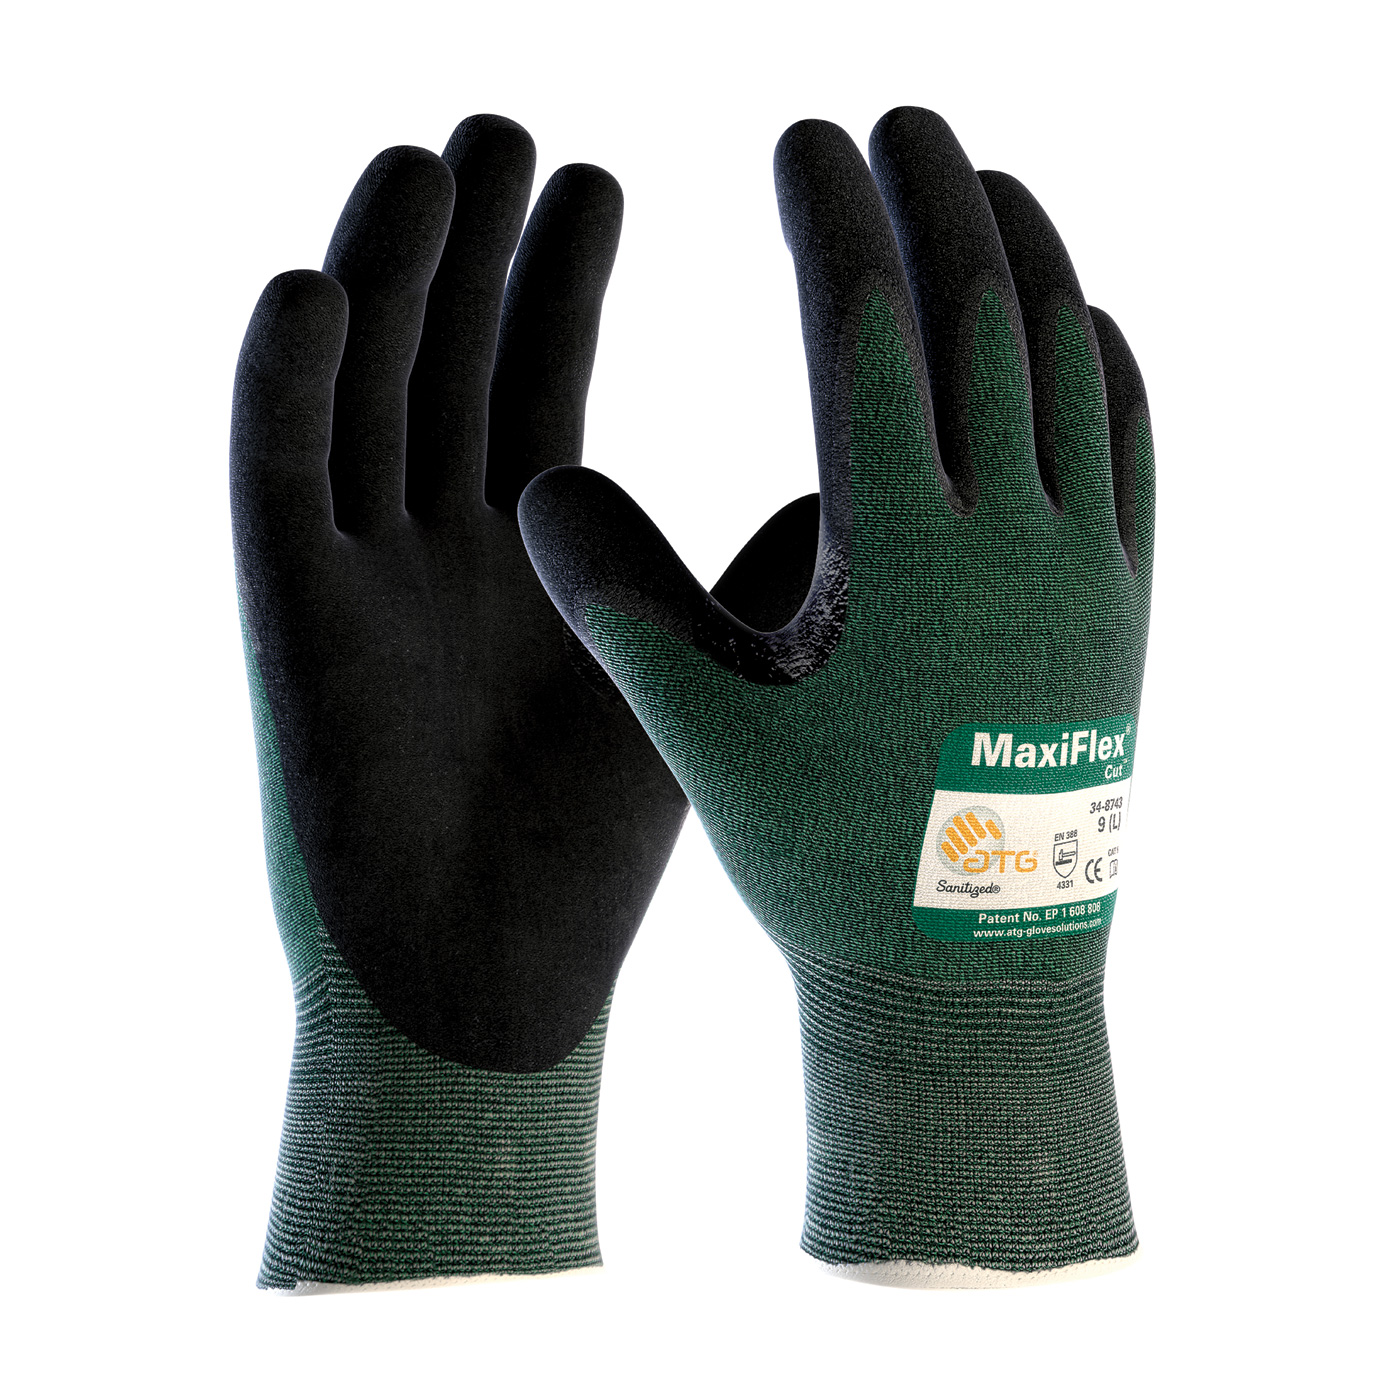 PIP 34-8743/XL MaxiFlex Cut Seamless Knit Engineered Yarn Glove with Premium Nitrile Coated MicroFoam Grip on Palm & Fingers - X-Large PID-34 8743 XL